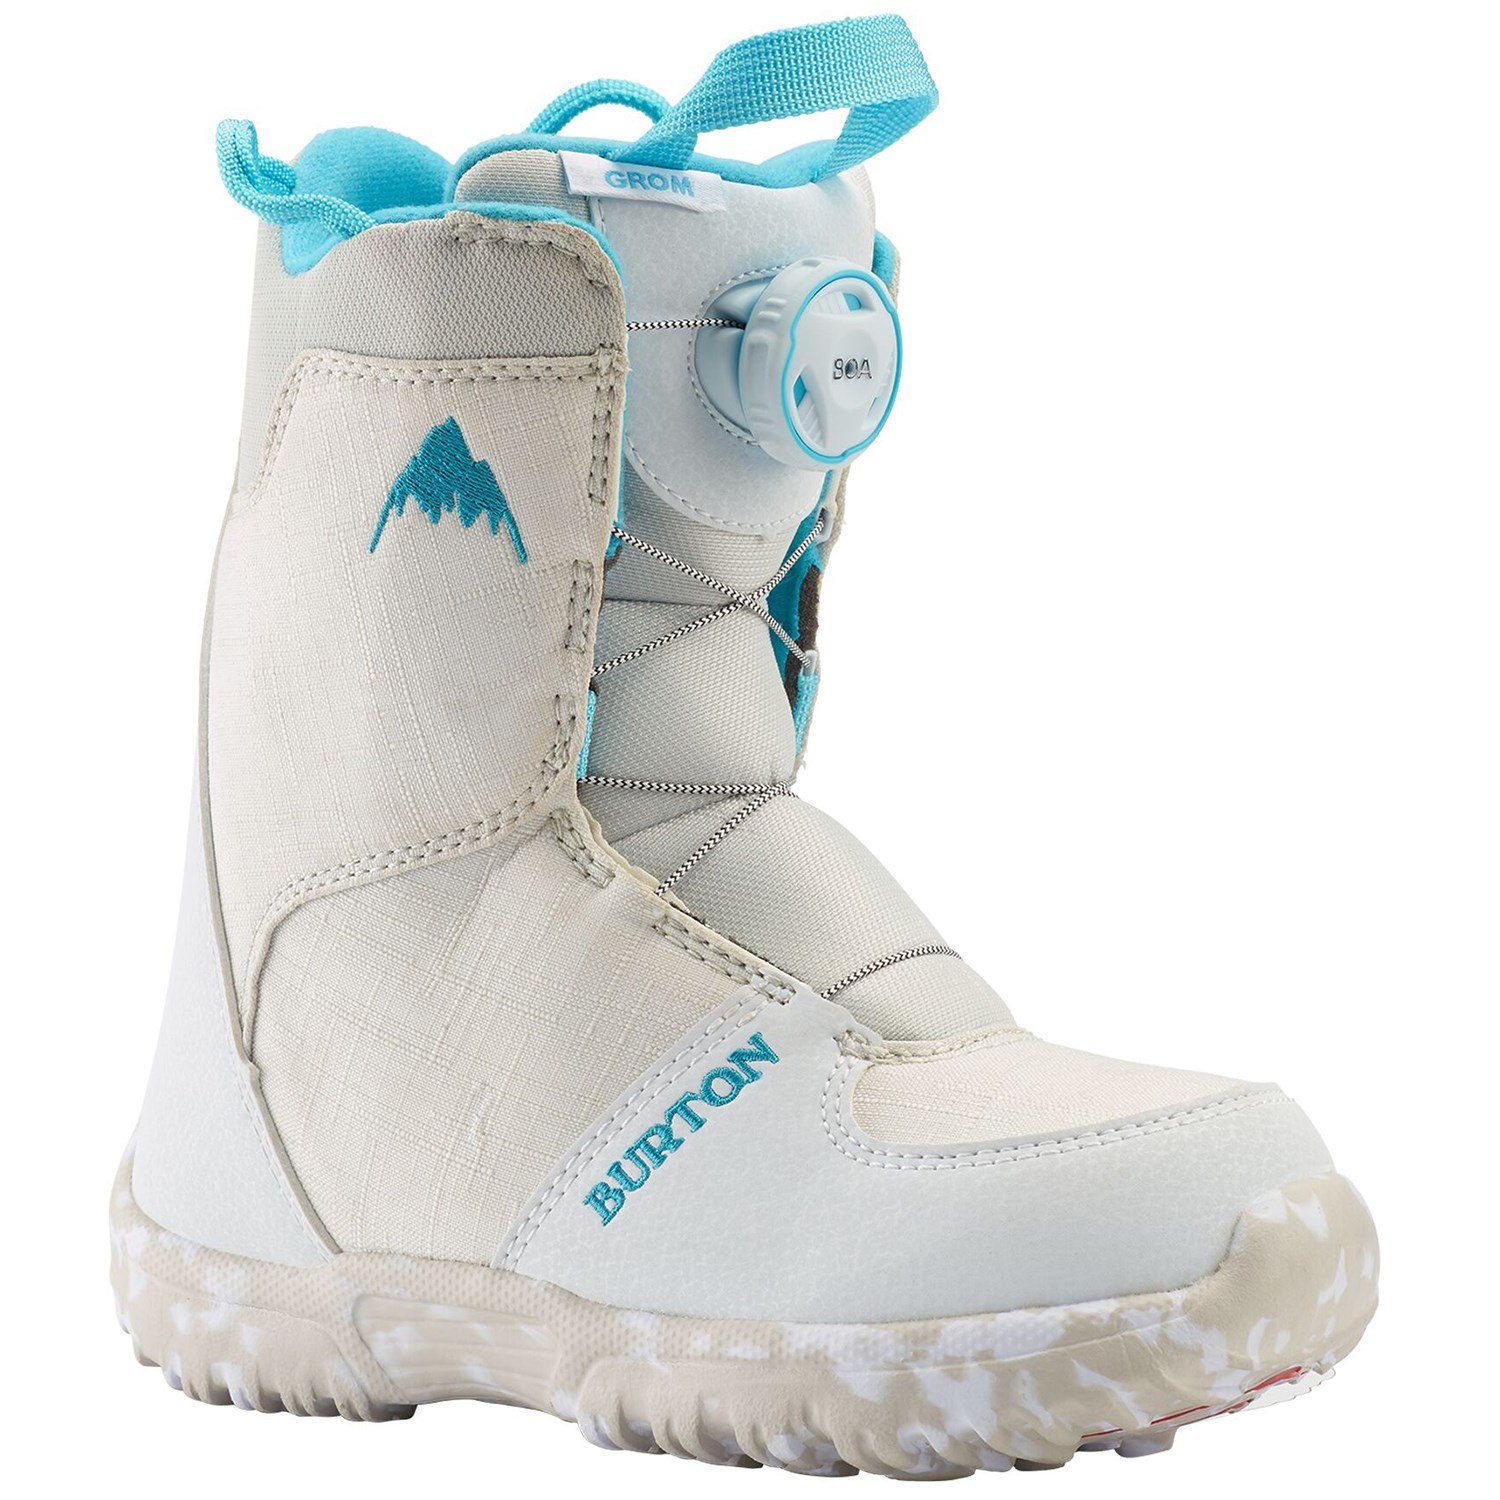 Ботинки для сноубординга Burton Grom Boa, белый детские сноубордические ботинки burton grom boa р 12c white